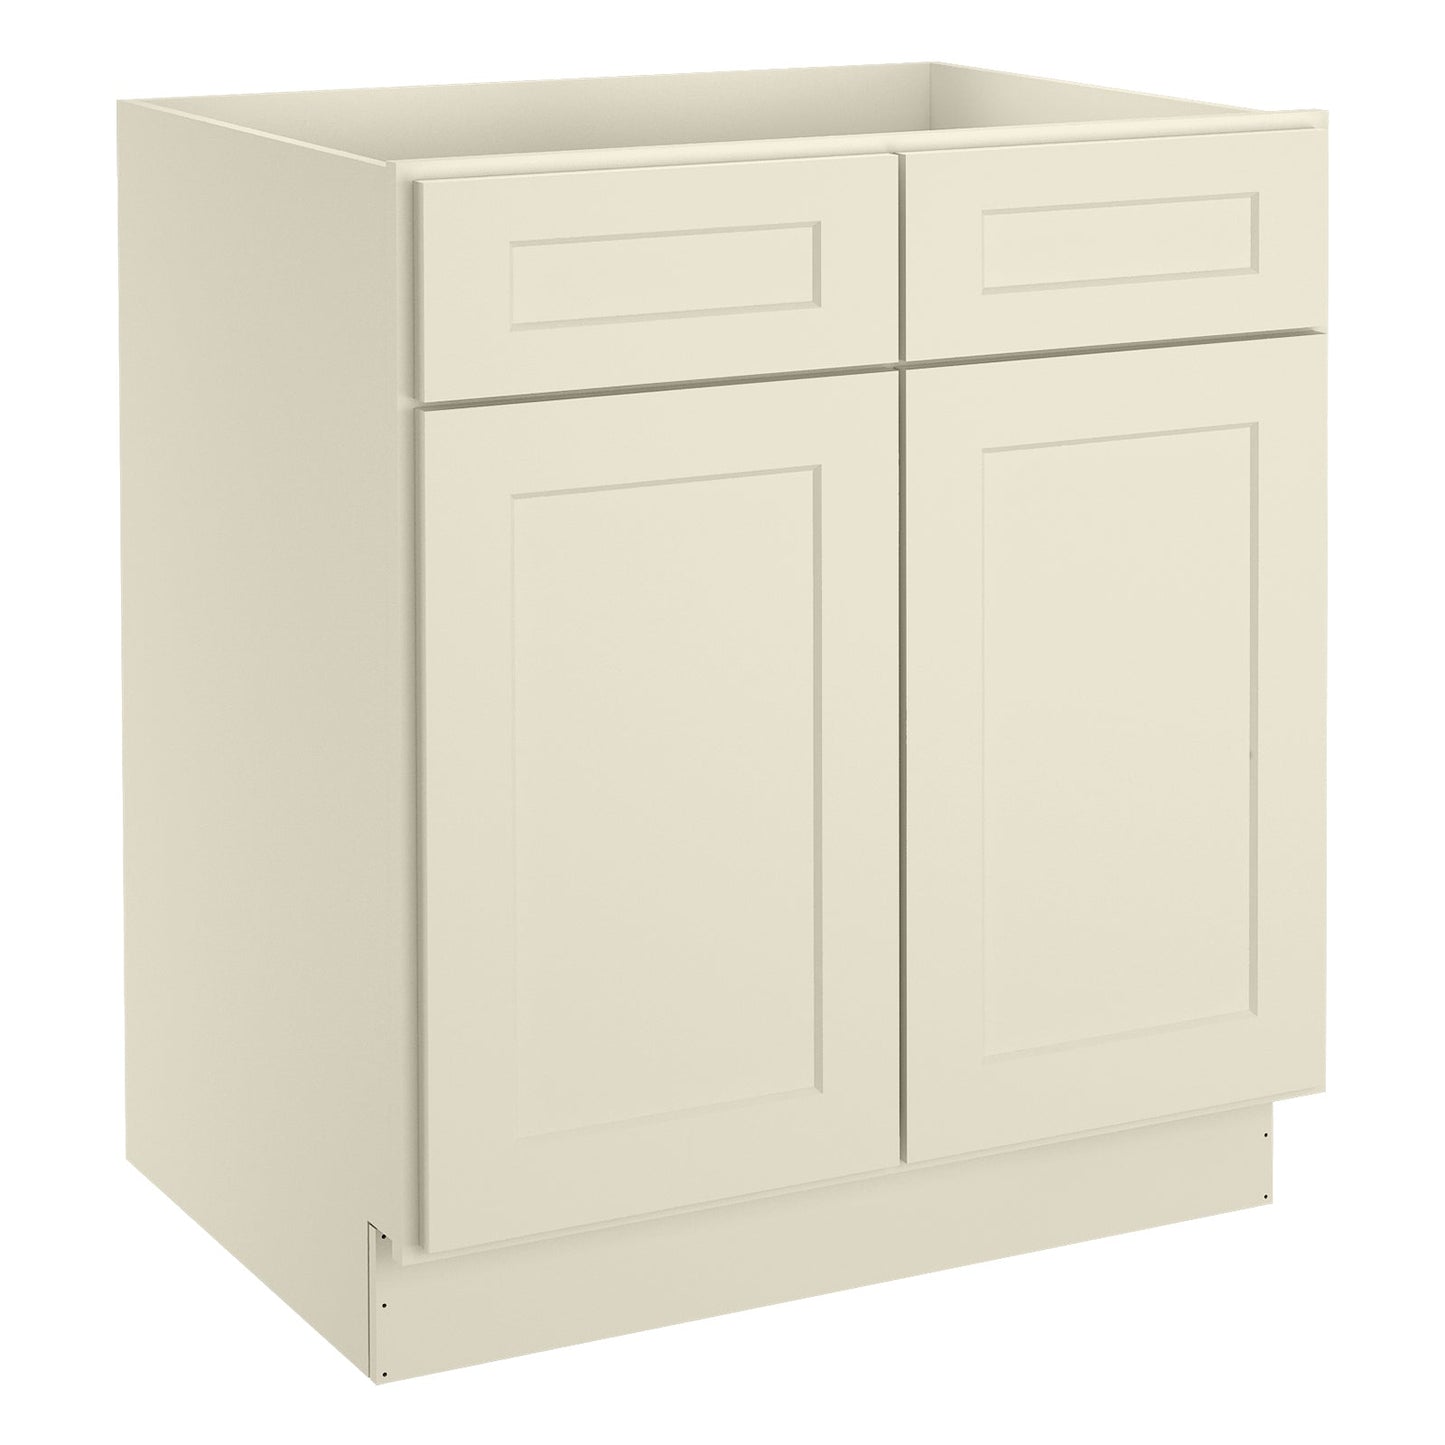 24"D*30"W*34.5"H Birch Solid Wood Base Kitchen Cabinet B30